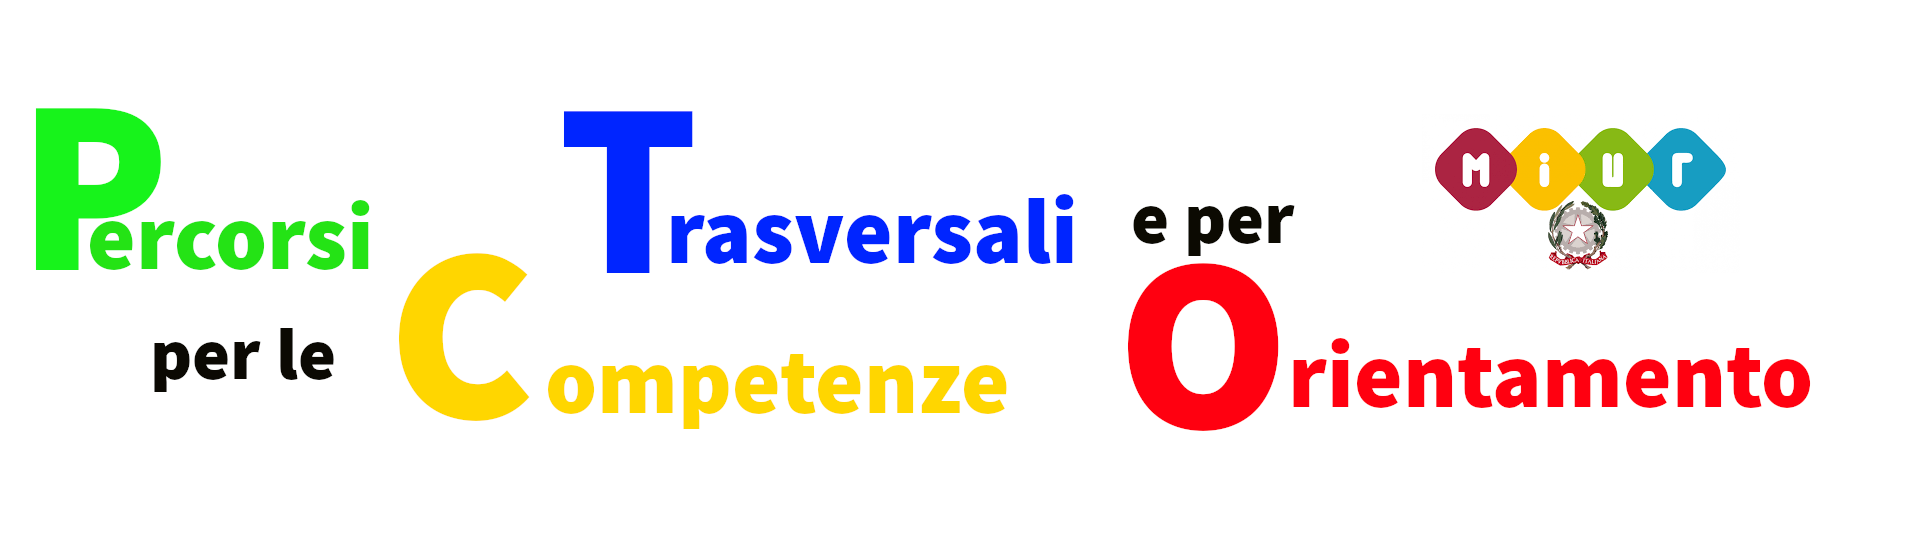 logo PCTO 2